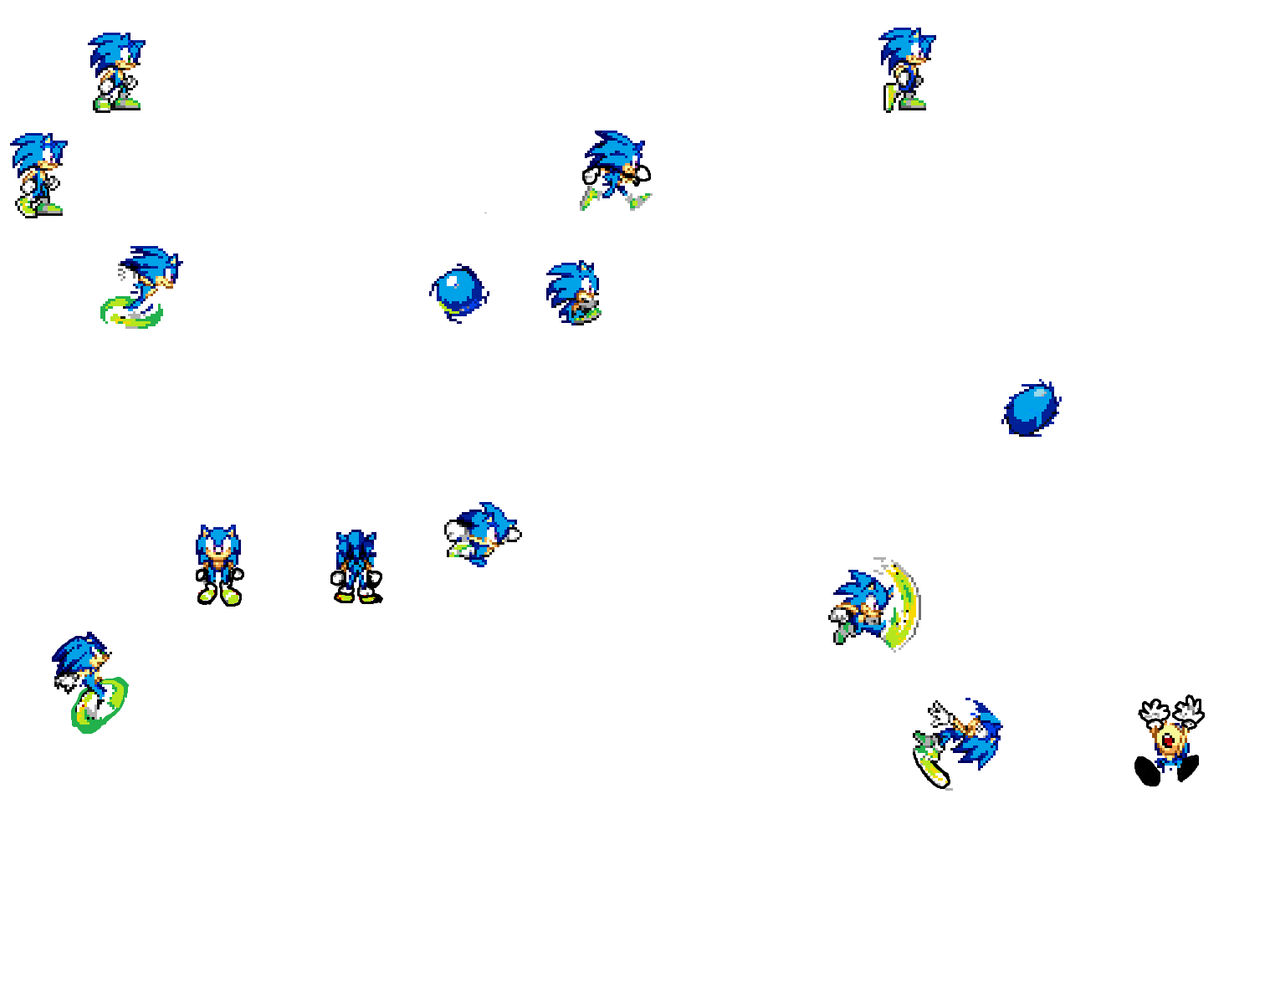 Metal Sonic Sprites (Sonic Advance Style) by NeoNyezu on DeviantArt